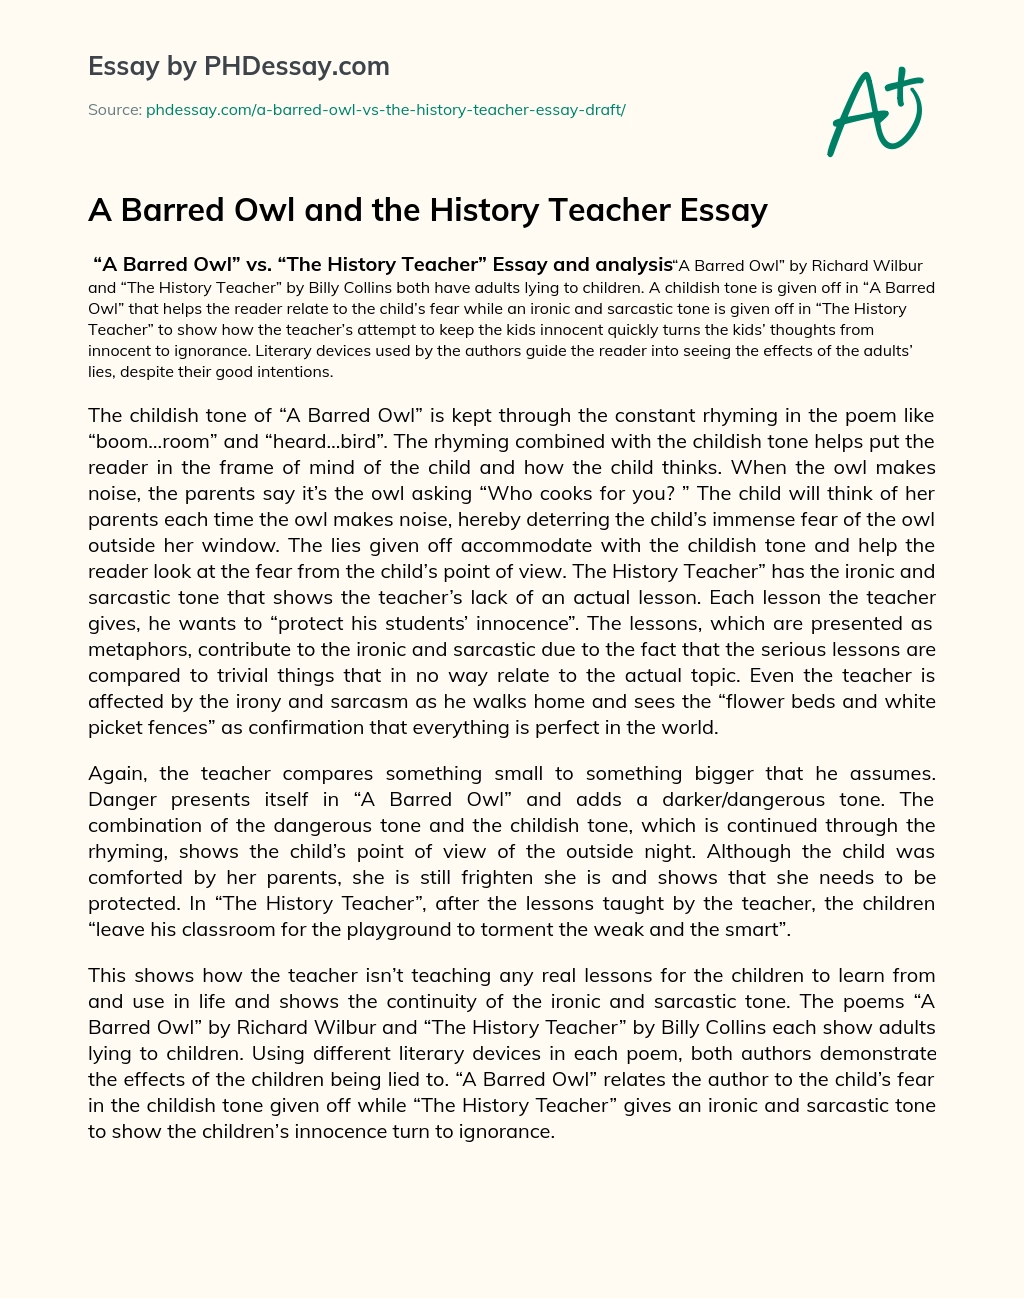 A Barred Owl and the History Teacher Essay essay